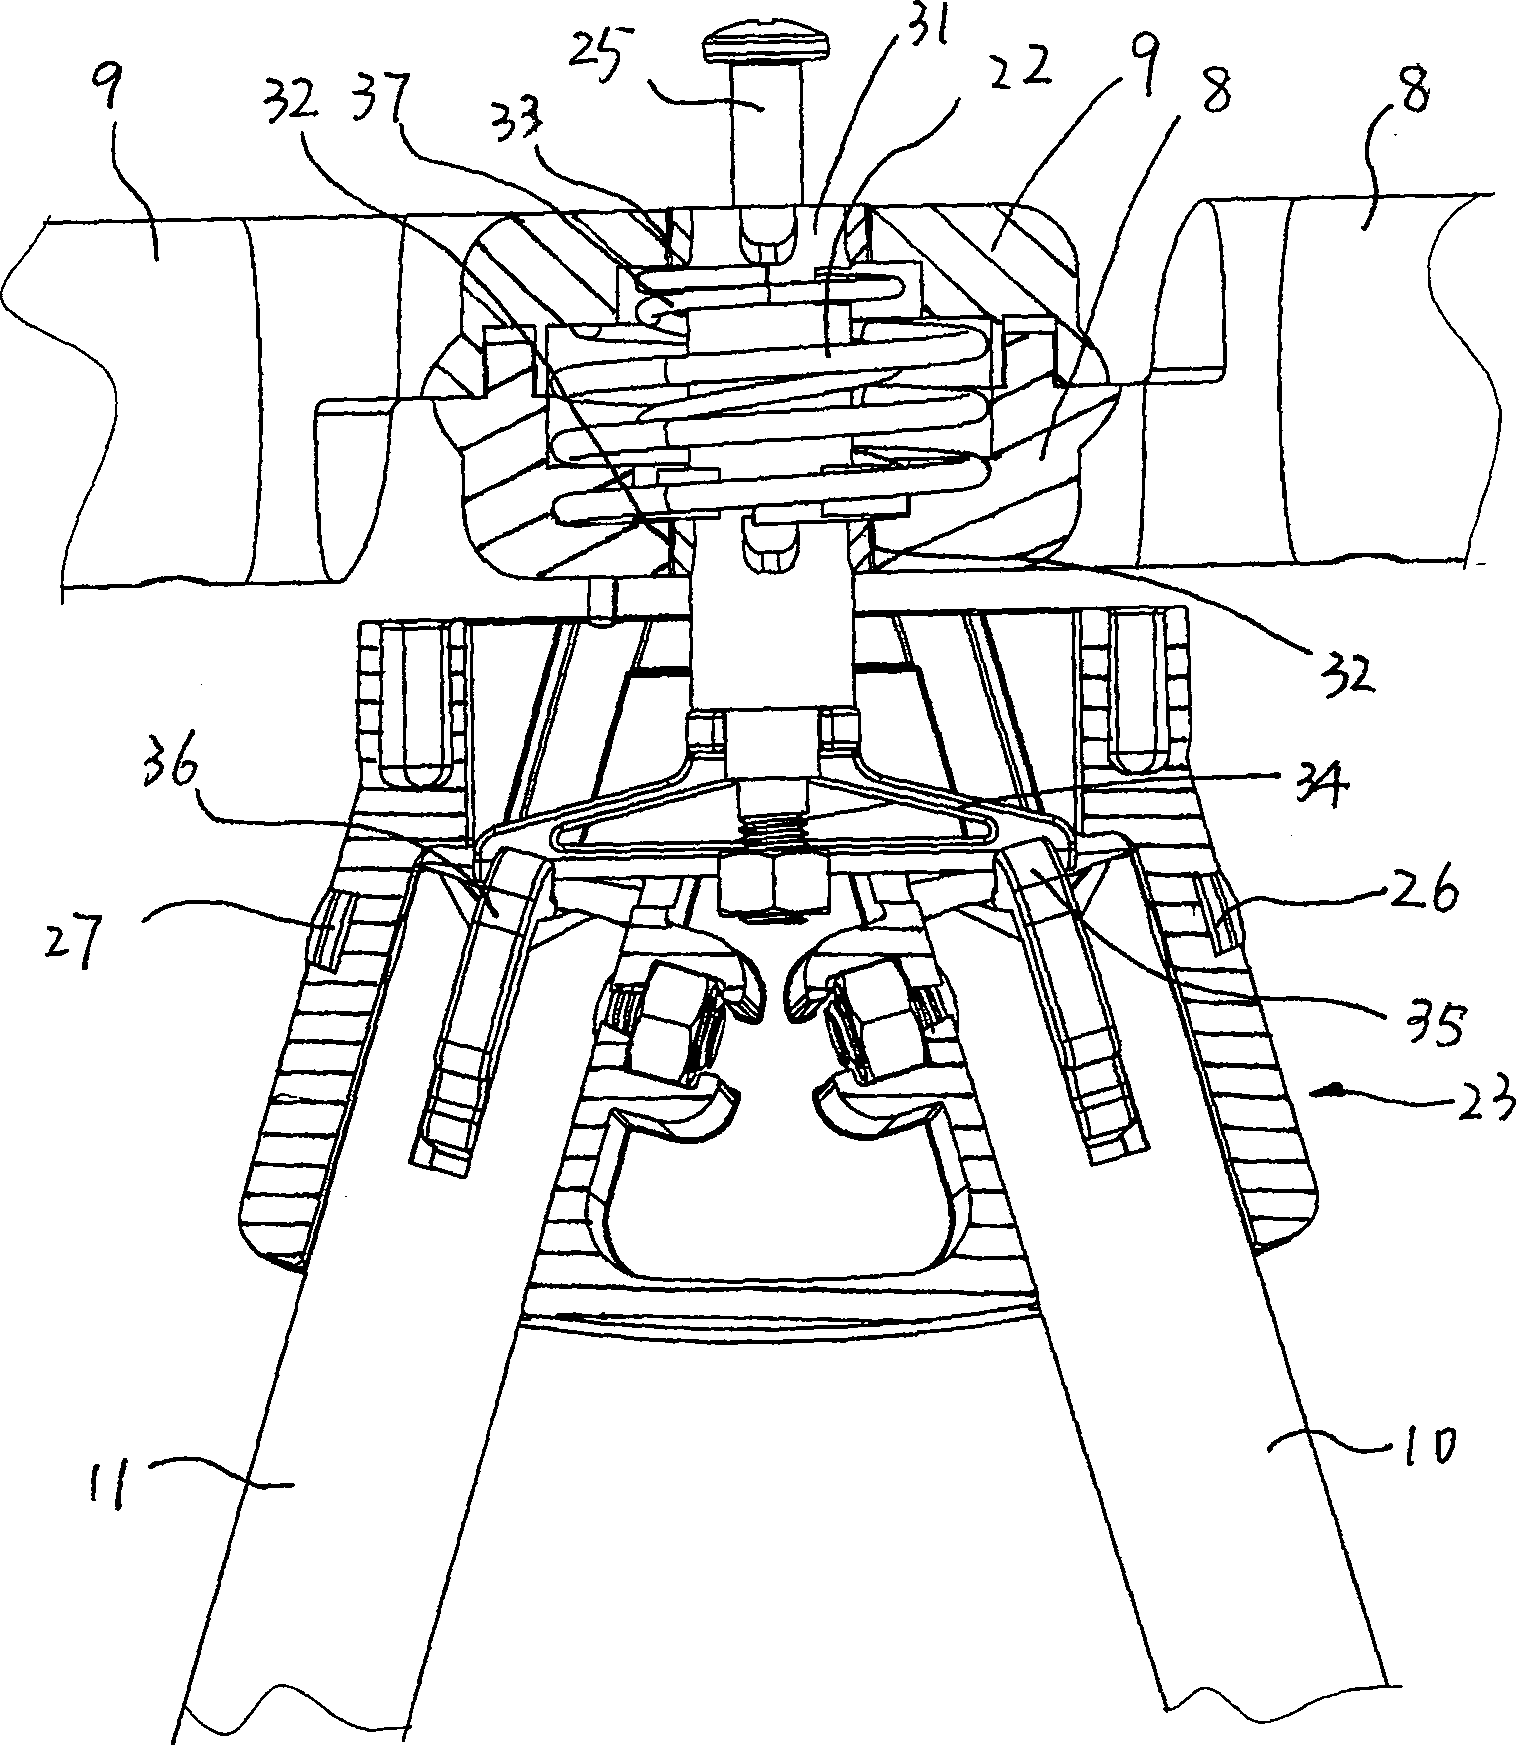 Bidirectional folding vehicle